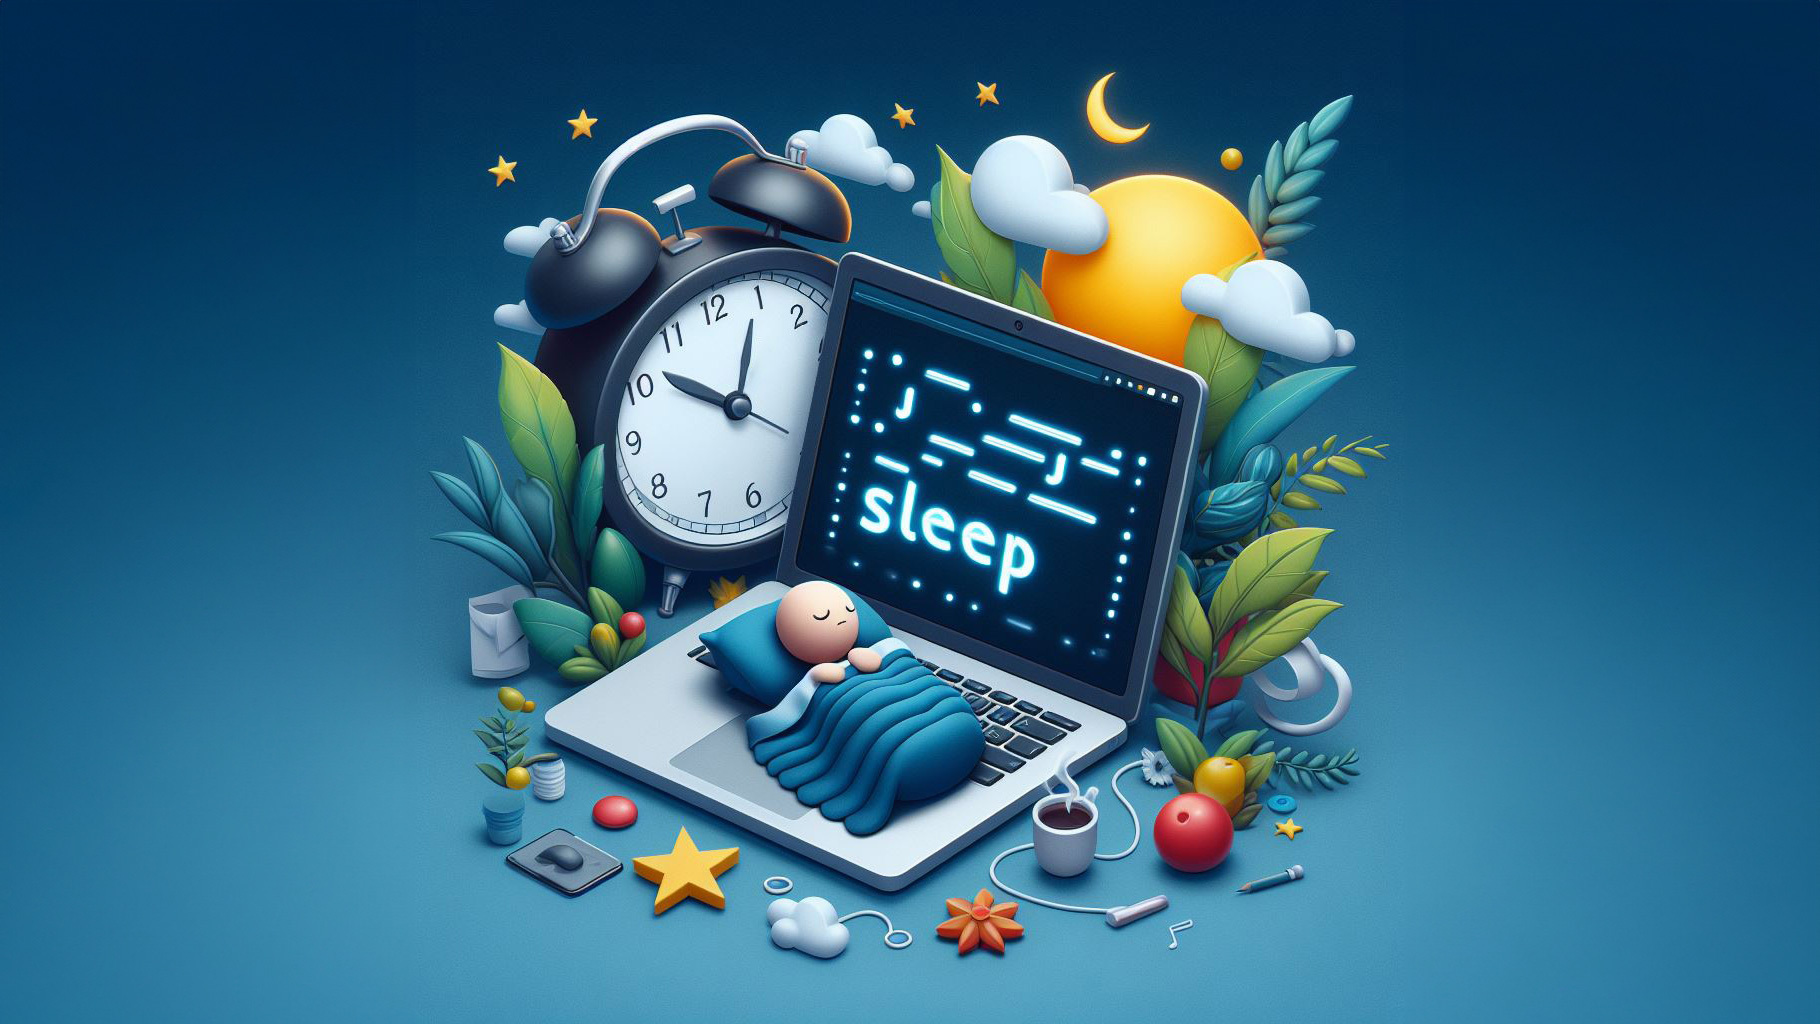 A concept of JavaScript Sleep